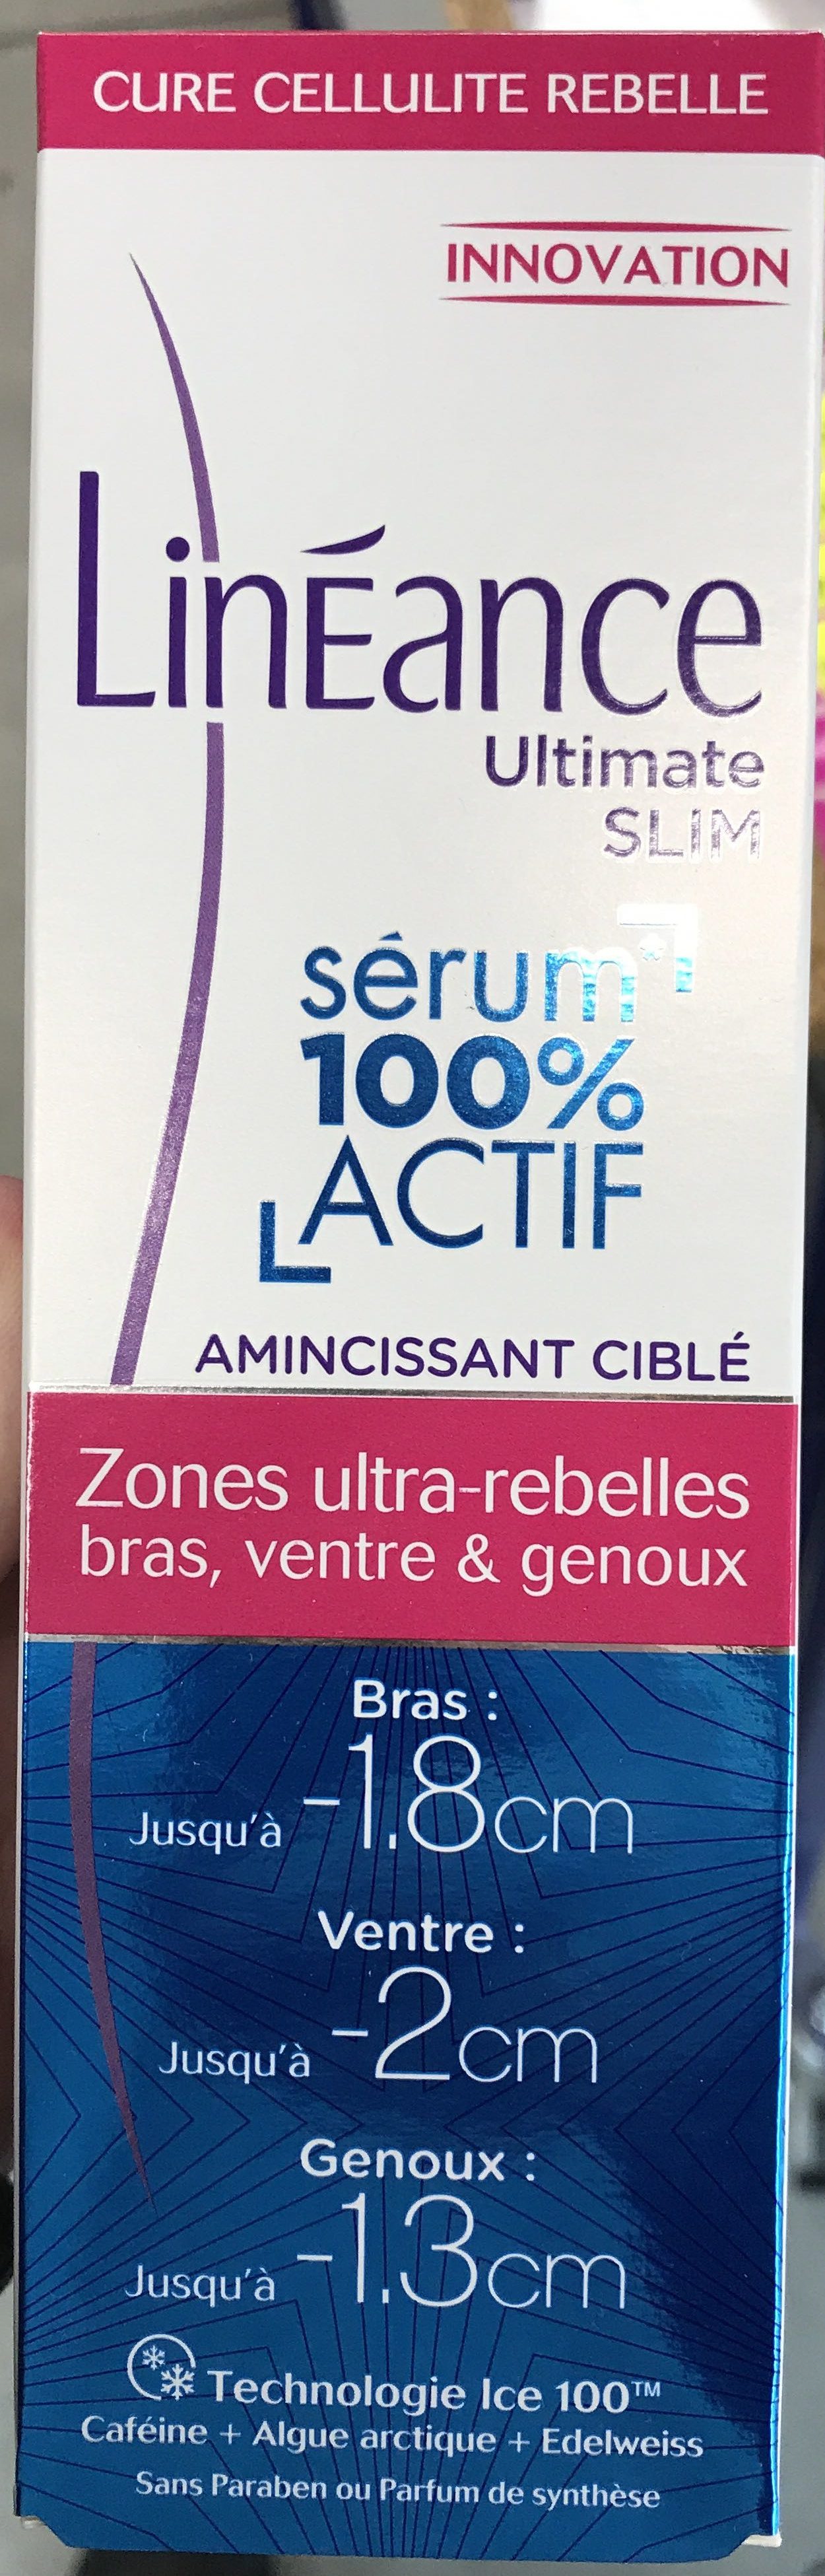 Ultimate Slim Sérum 100% Actif Cure Cellulite Rebelle - Product - fr